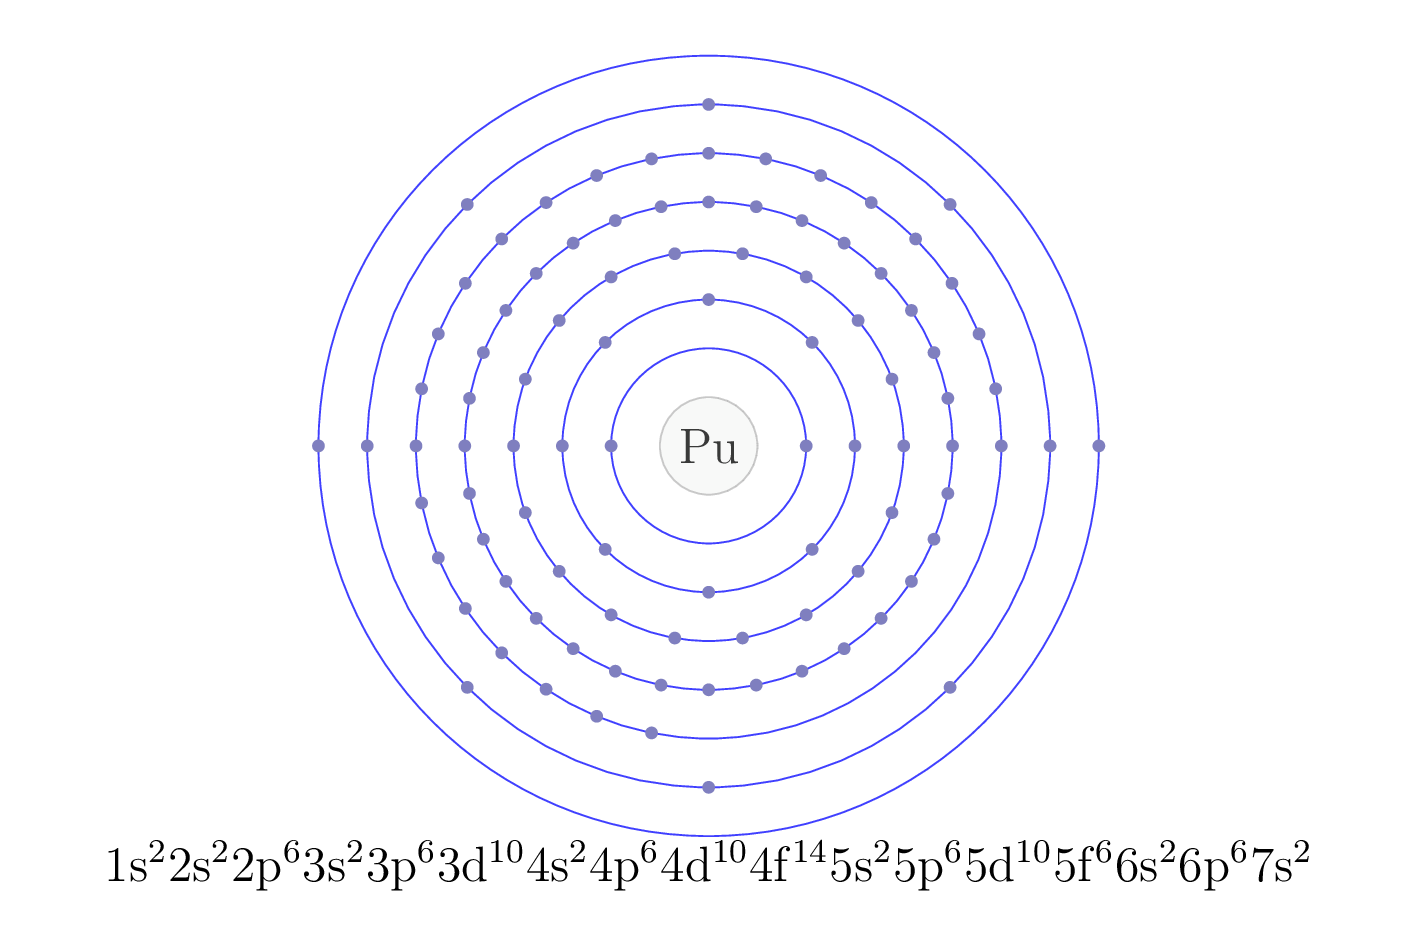 electron configuration of element Pu